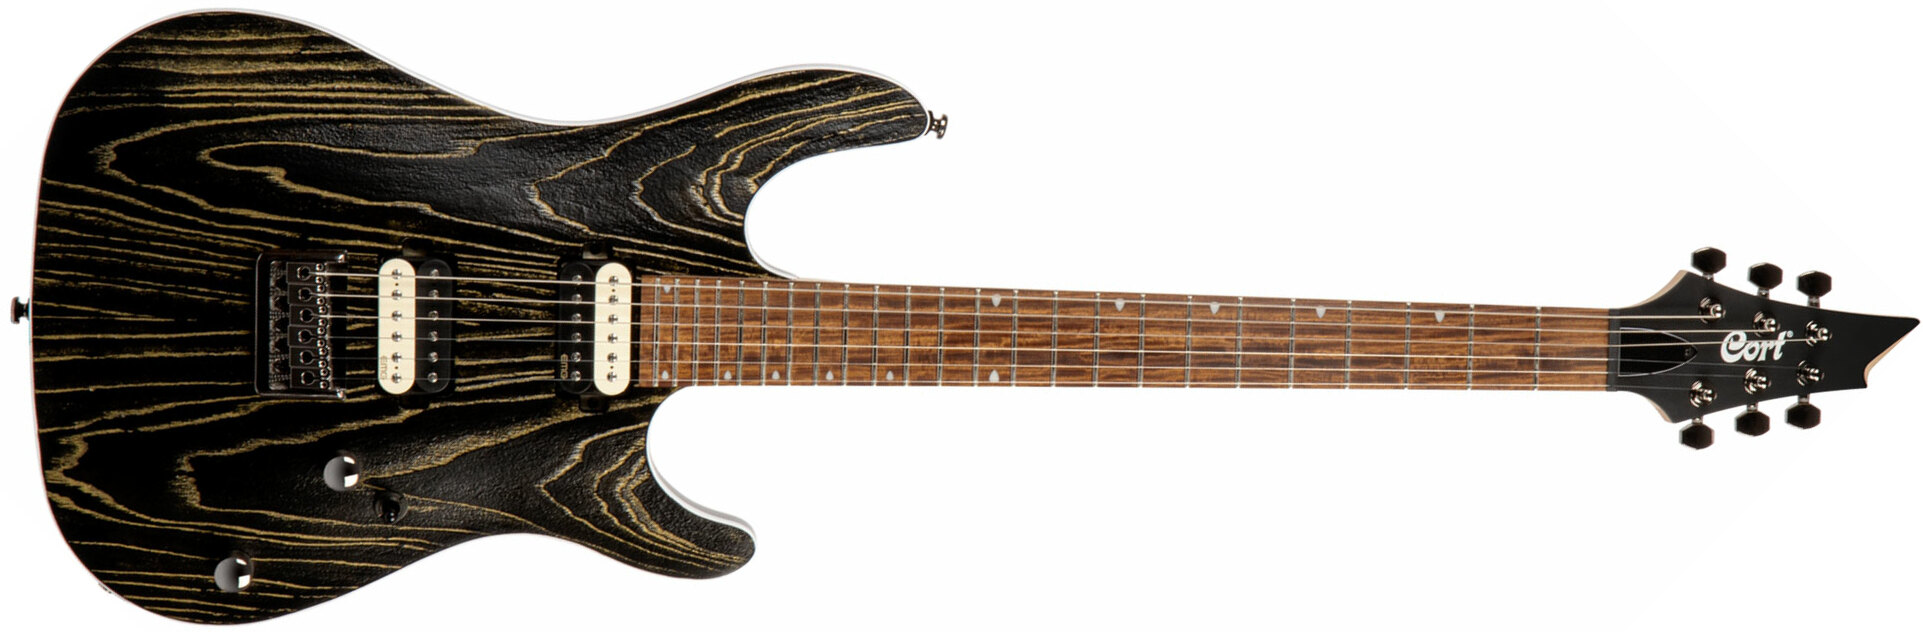 Cort Kx300 Ebr Hh Emg Ht Jat - Etched Black Gold - Str shape electric guitar - Main picture